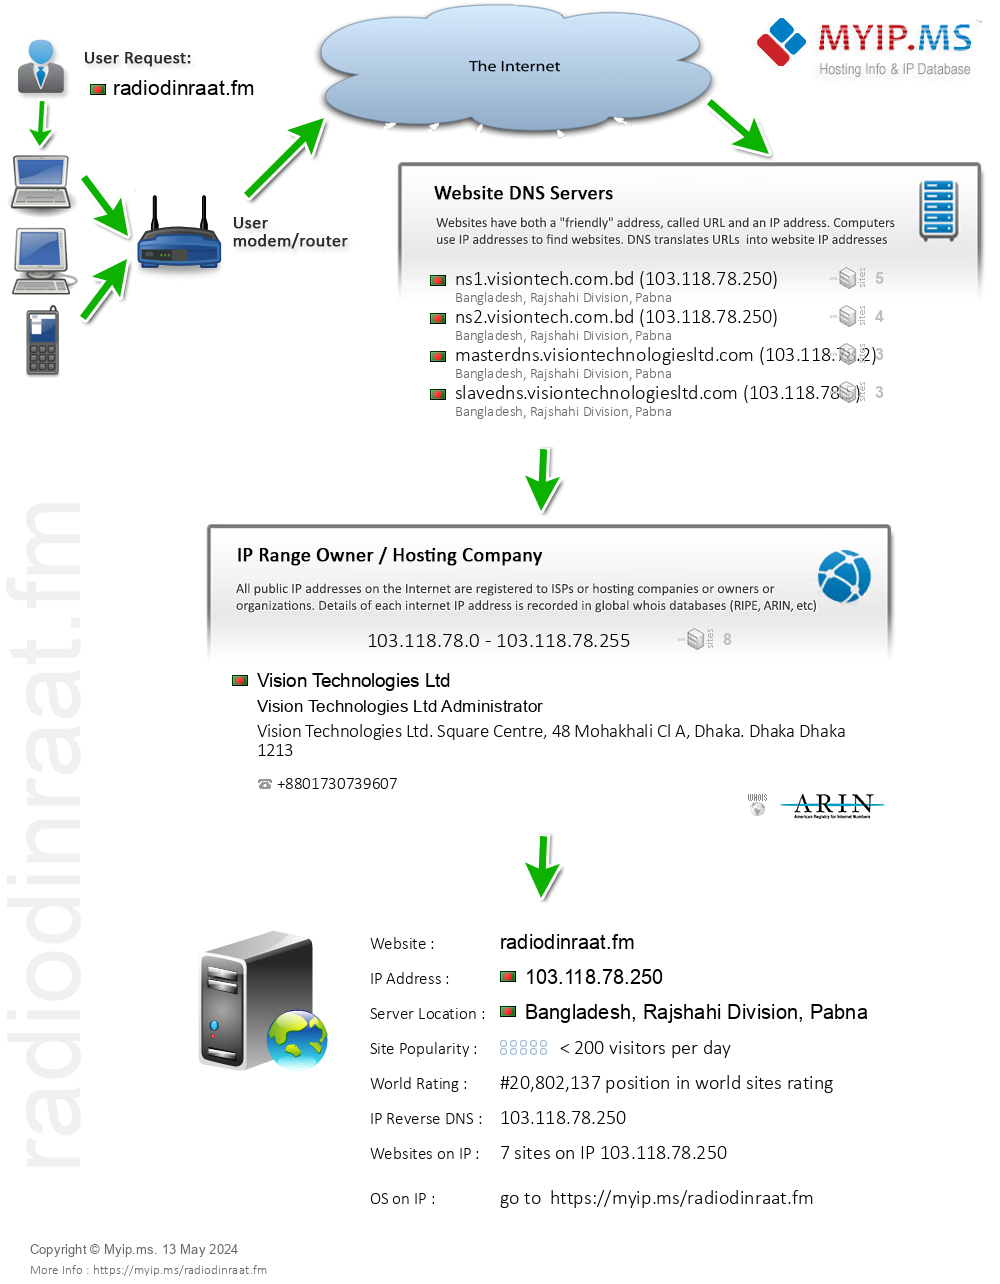 Radiodinraat.fm - Website Hosting Visual IP Diagram